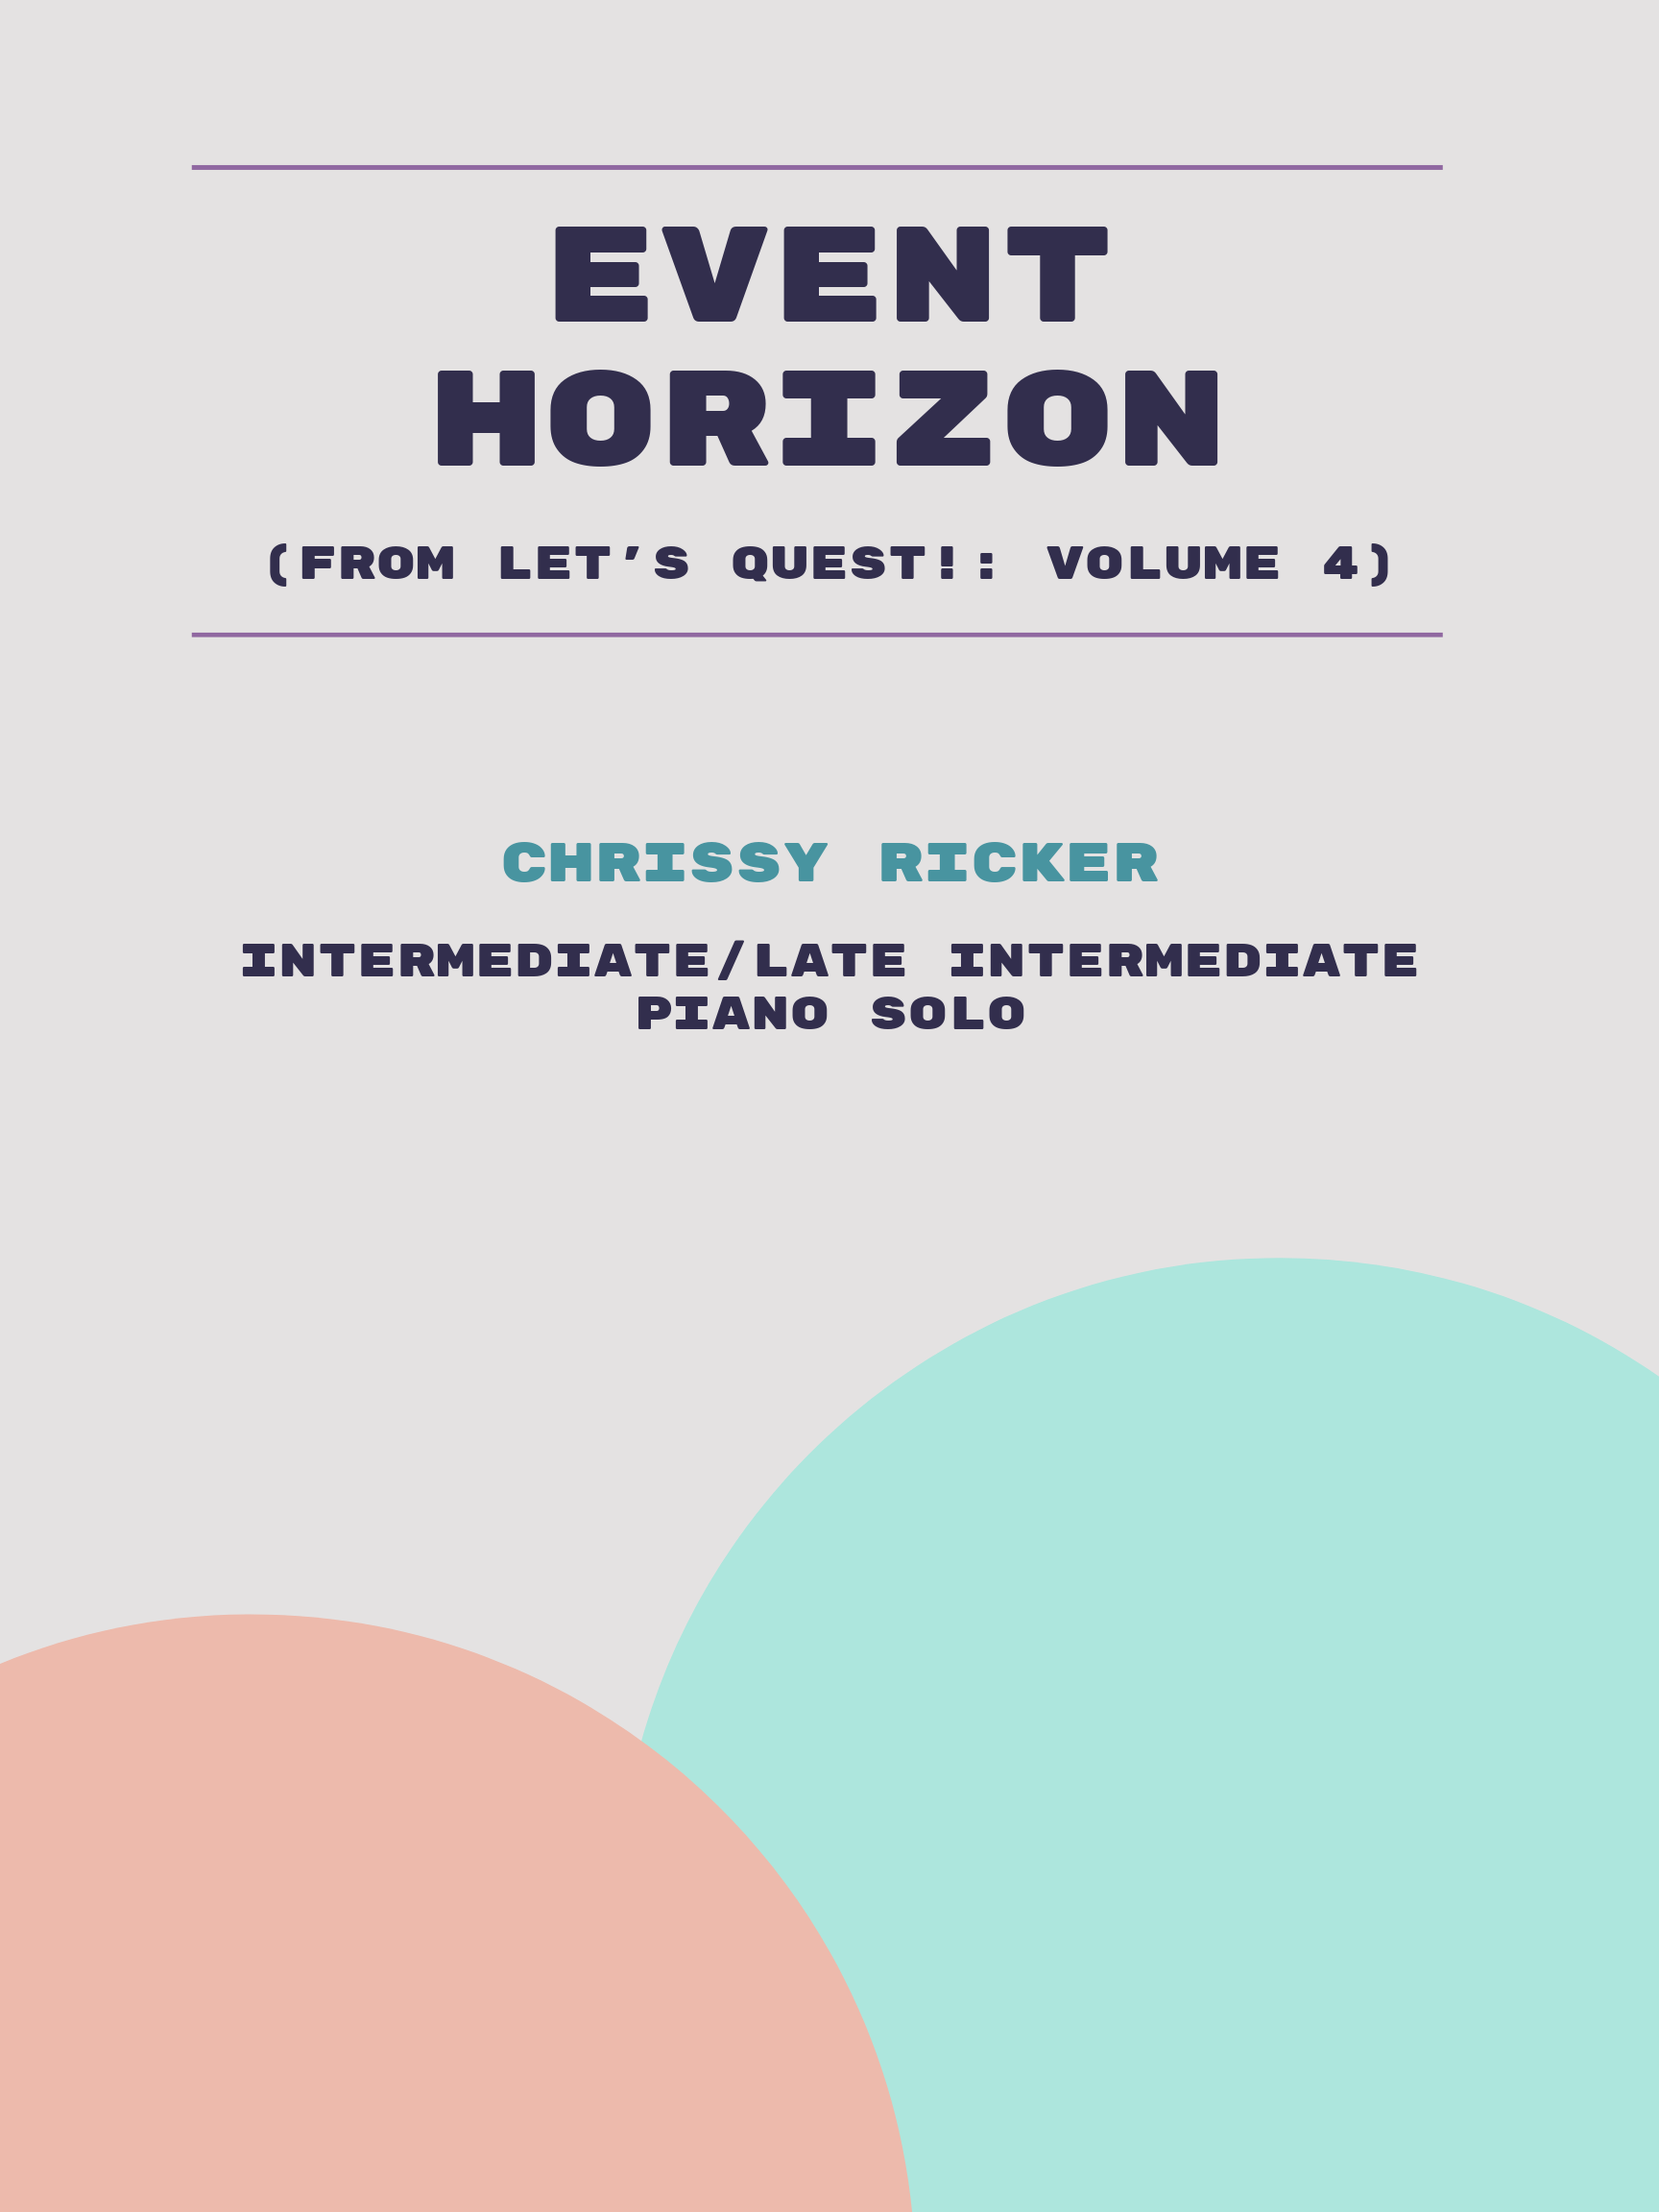 Event Horizon by Chrissy Ricker